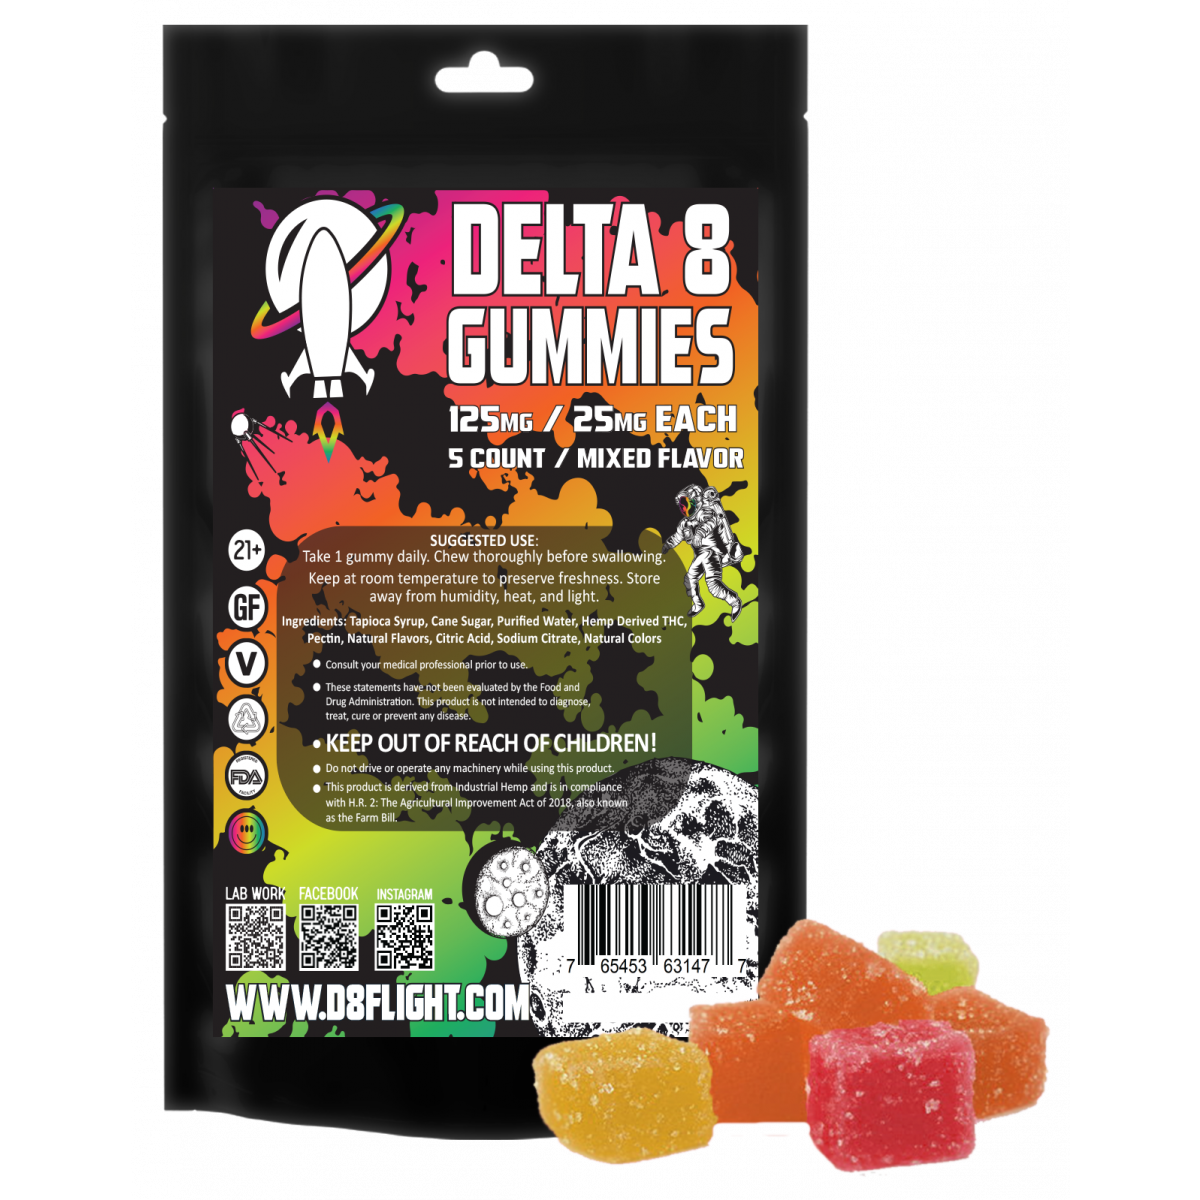 D8 gummies 5ct Mixed flavors